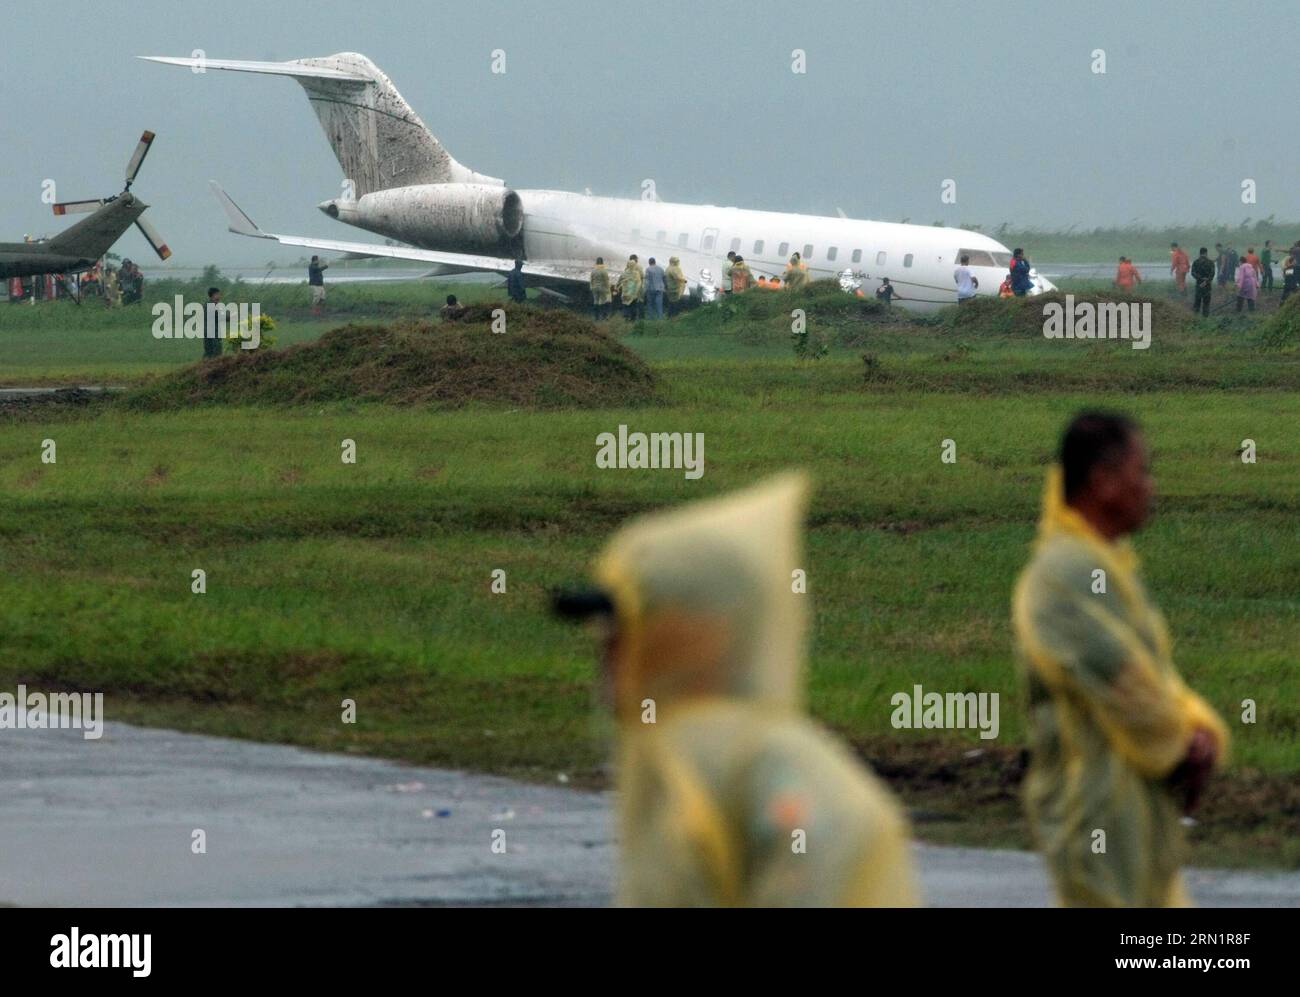 AKTUELLES ZEITGESCHEHEN Philippinen - Maschine aus Papst-Konvoi rutscht von Landebahn (150117) -- LEYTE PROVINCE, Jan. 17, 2015 -- A private jetliner lies on the ground after skidding off the wet runway due to rains brought by tropical storm Mekkhala at the Daniel Romualdez Airport in Leyte Province, the Philippines, Jan. 17, 2015. ) (zjy) PHILIPPINES-LEYTE PROVINCE-PLANE-OVERSHOOT Stringer PUBLICATIONxNOTxINxCHN   News Current events Philippines Machine out Pope Convoy slips from Runway  Leyte Province Jan 17 2015 a Private  Lies ON The Ground After skidding off The Wet Runway Due to Rains BR Stock Photo